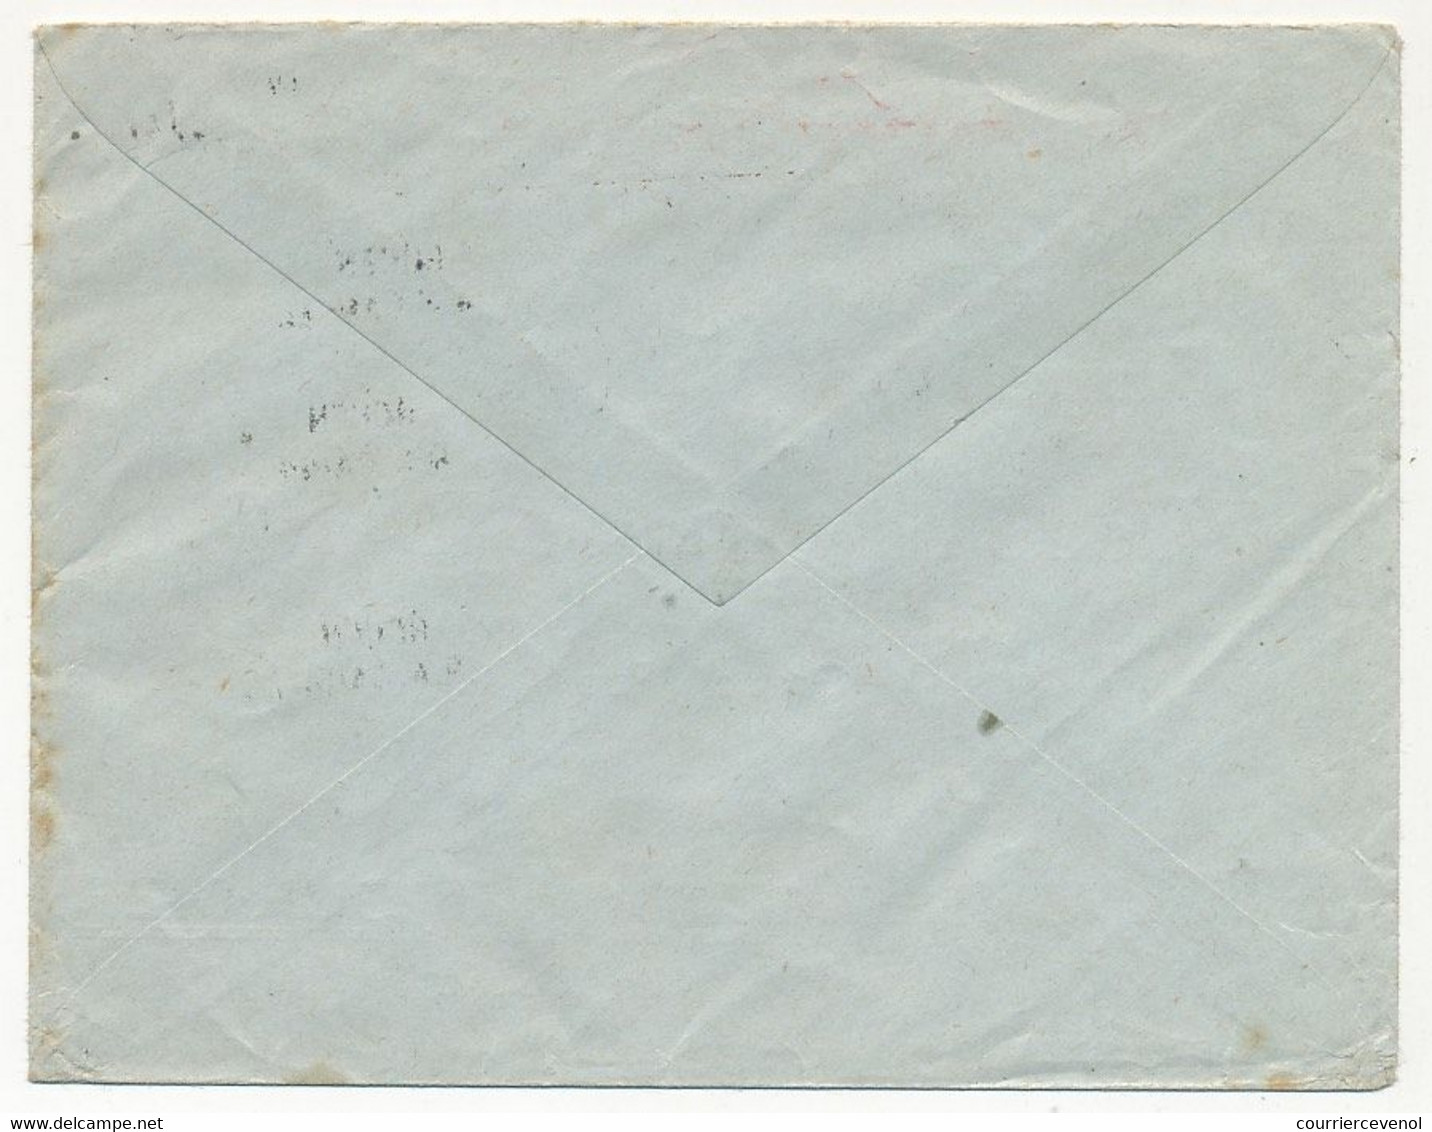 FRANCE - Env. Affr Composé 8F Pétrarque + 20F Muller + Blasons... Obl Rouen 1958 - Briefe U. Dokumente